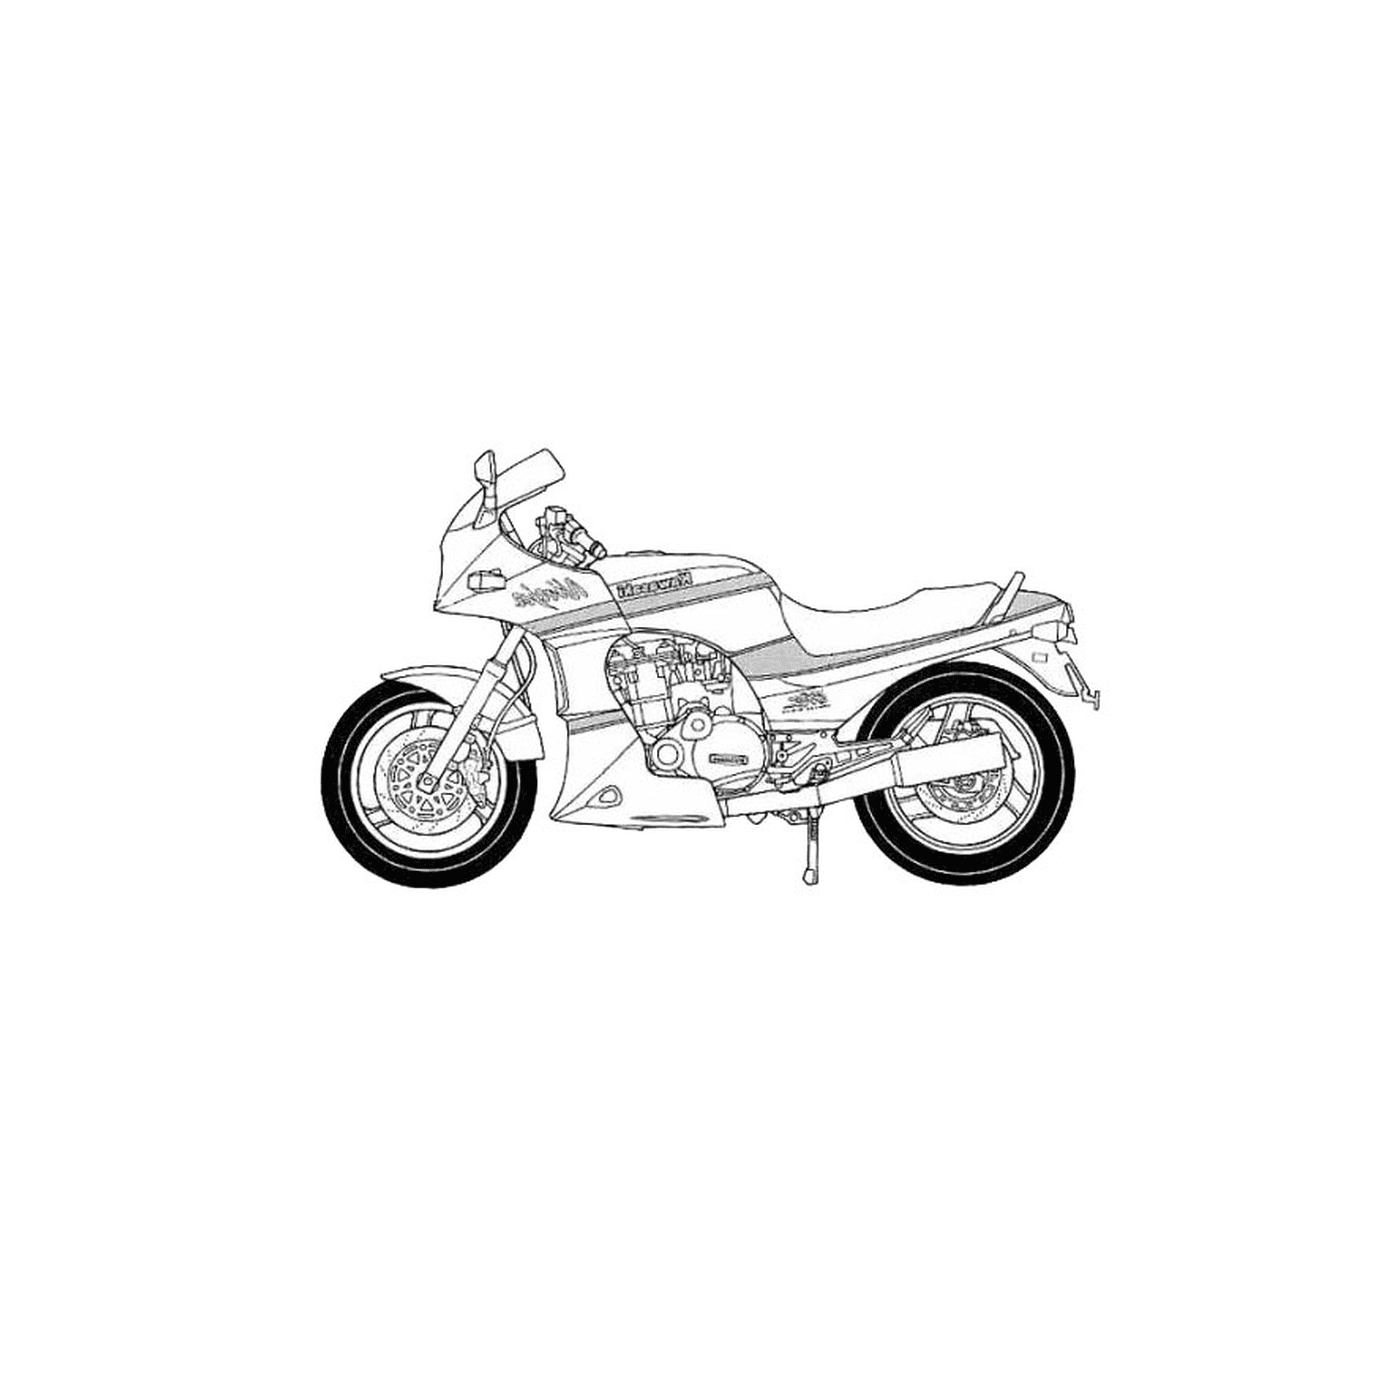  Motocicleta Kawasaki sobre fondo blanco 